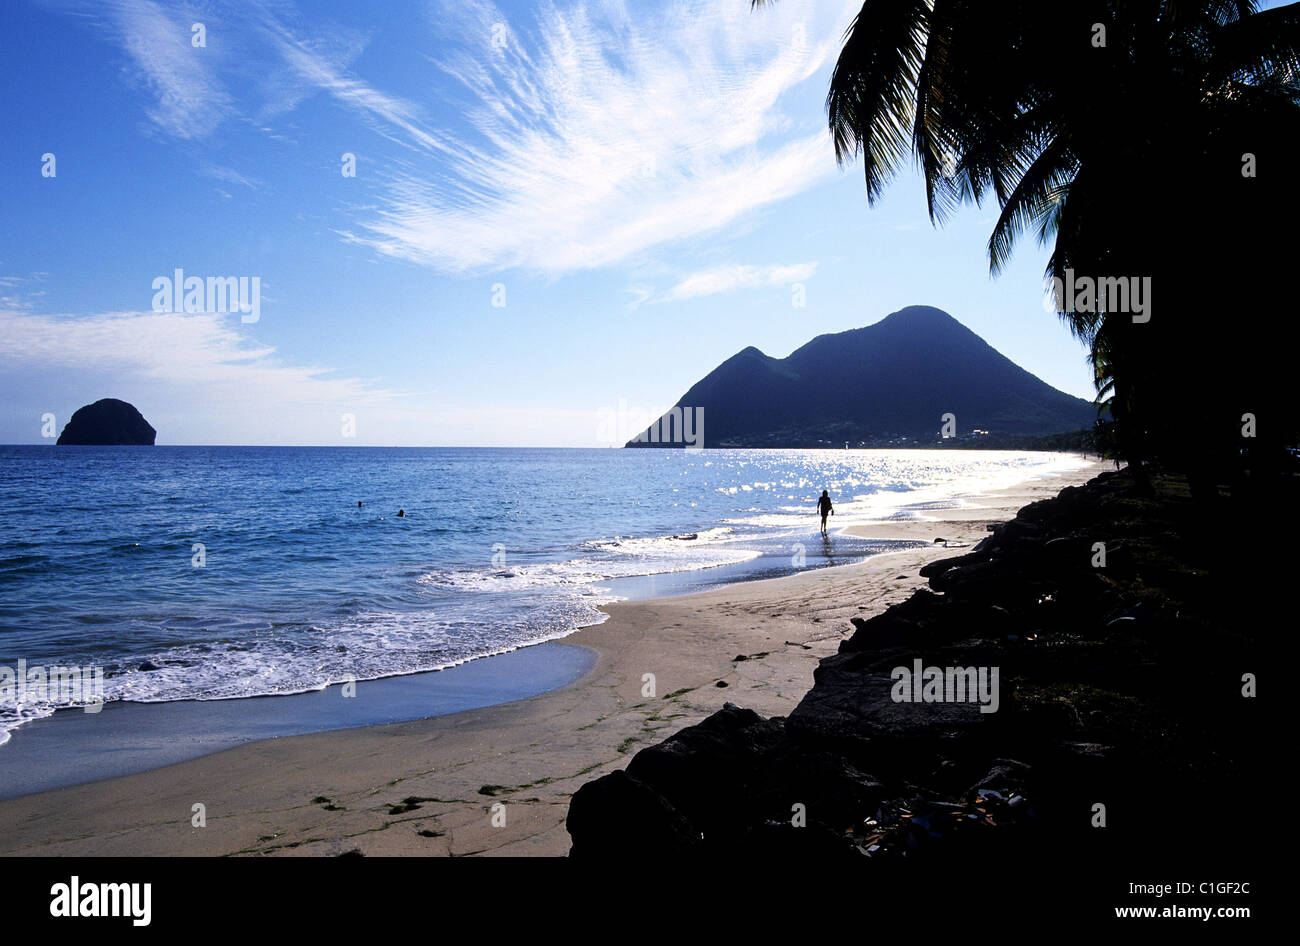 France, Martinique Island, Diamond beach and the Diamond rock Stock Photo